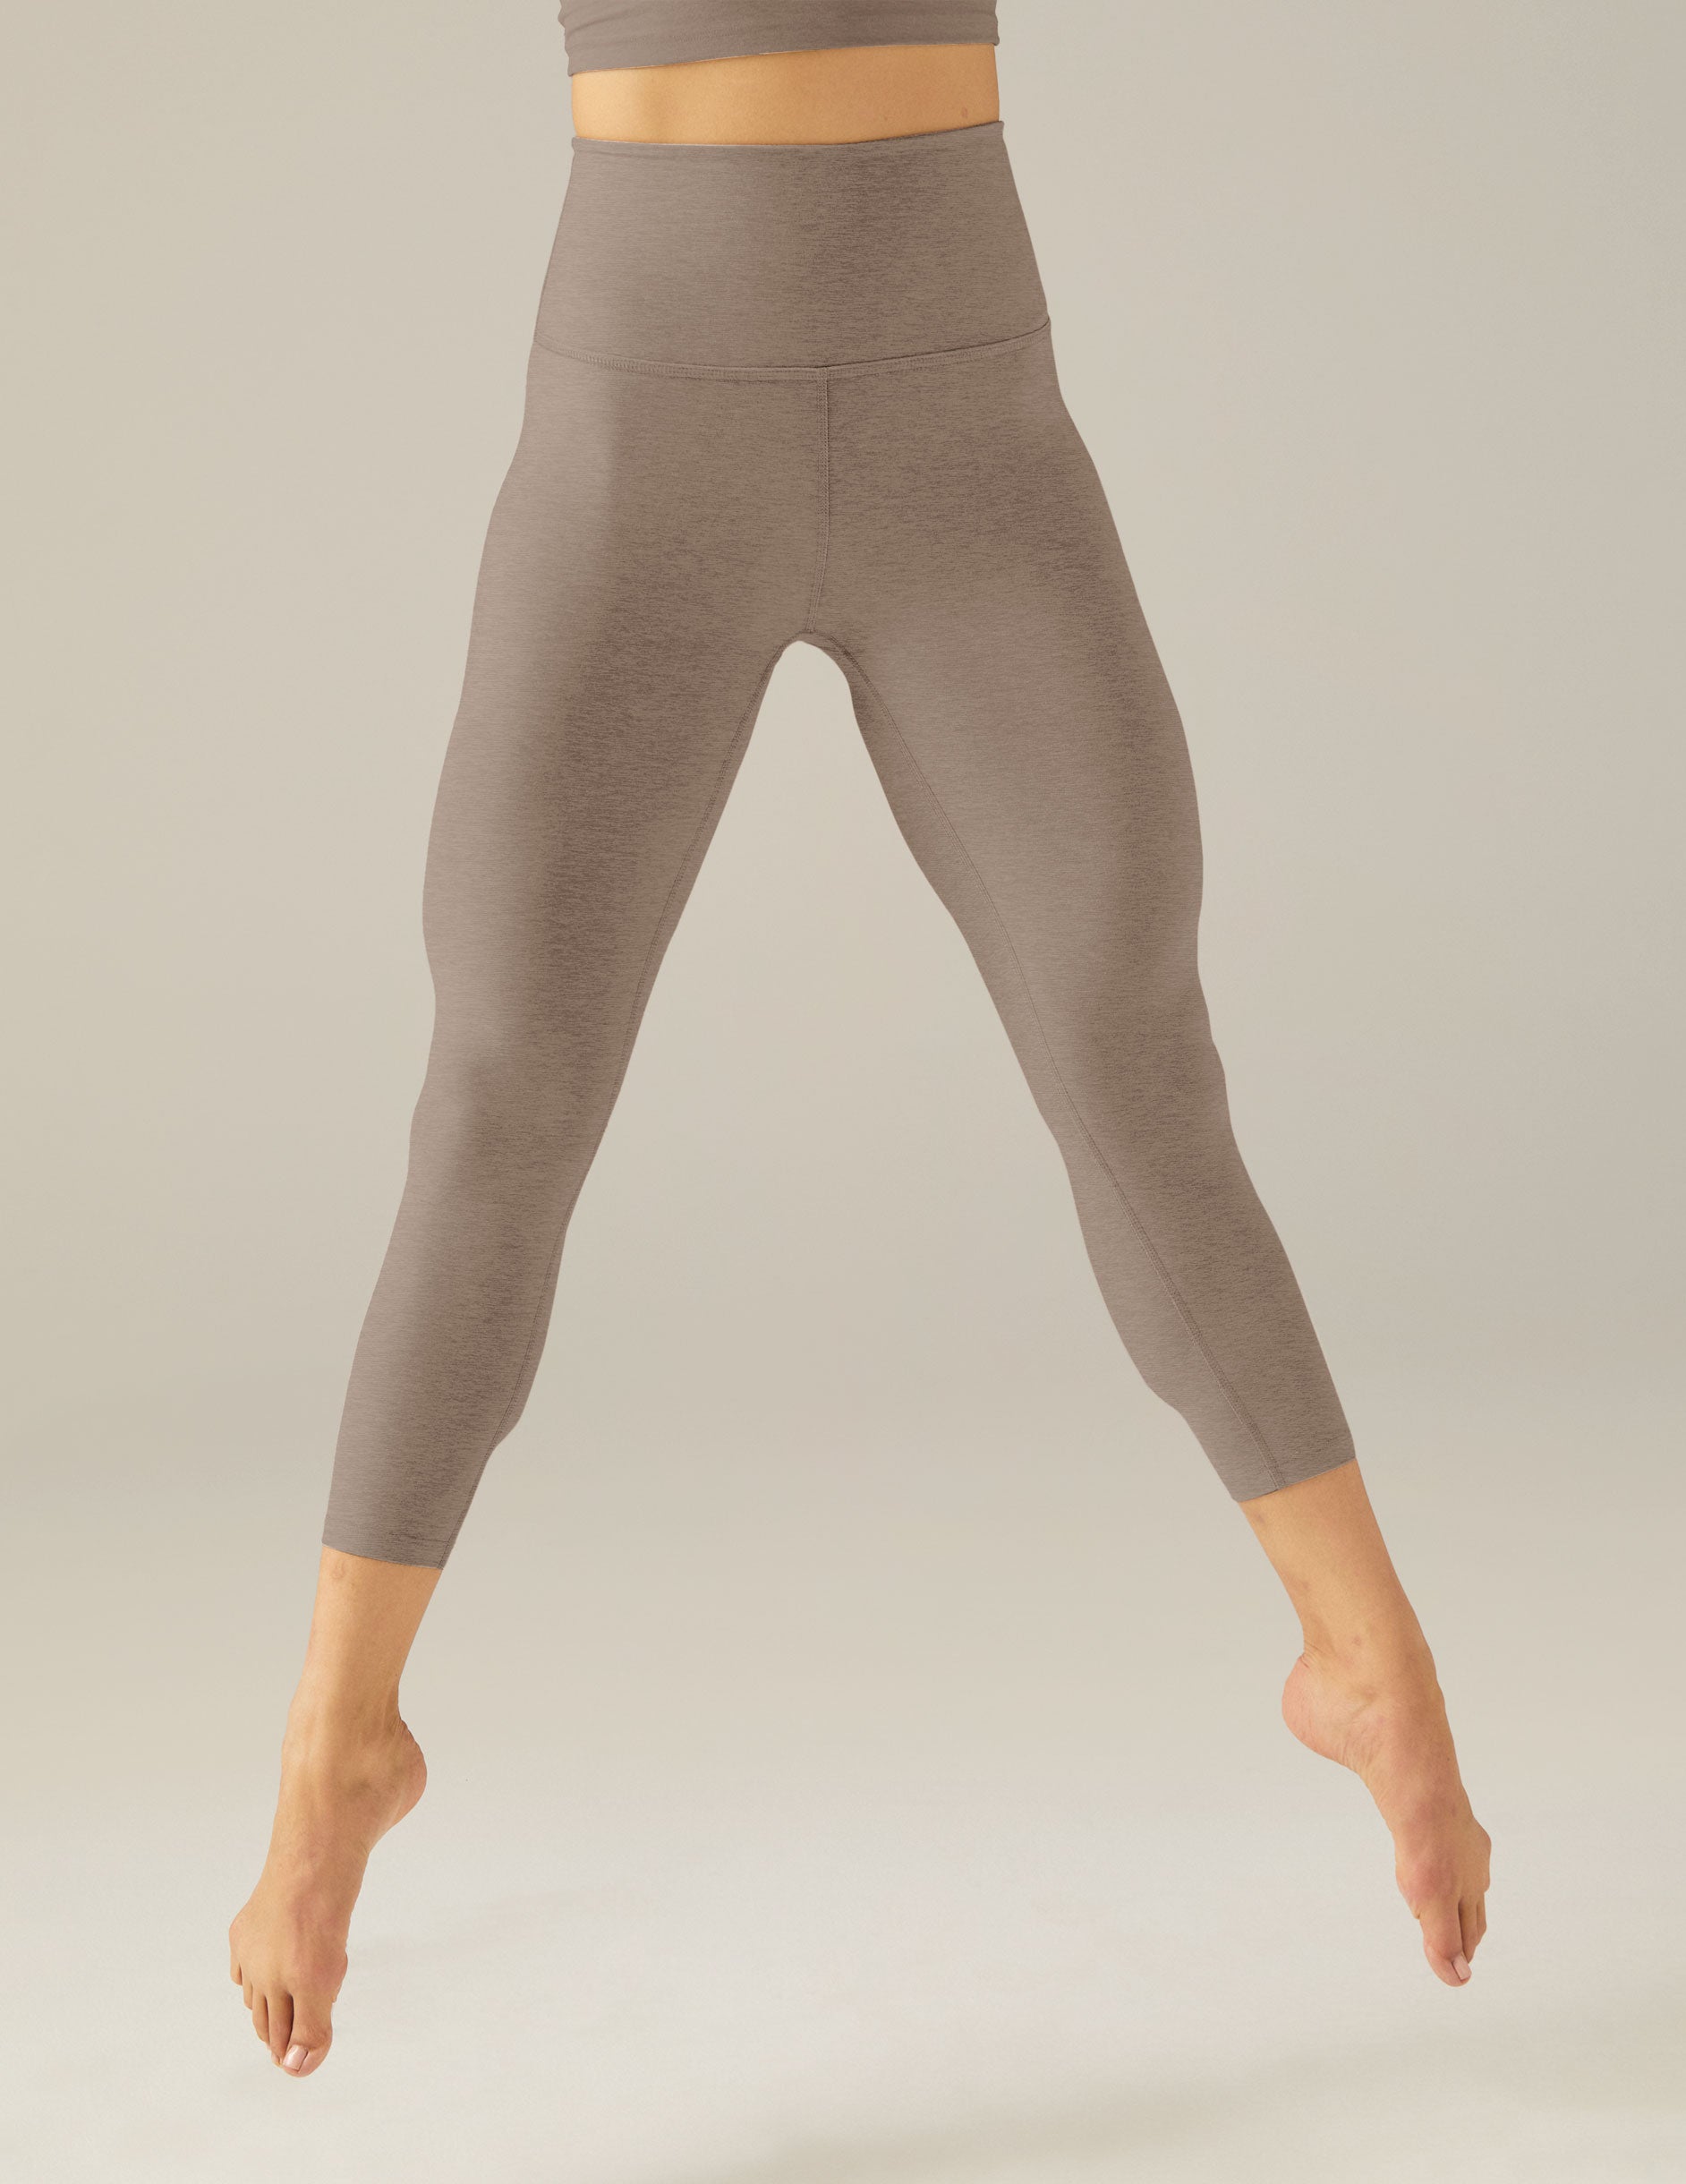  Core 10 Women's Spectrum High-Waist Capri Yoga Legging